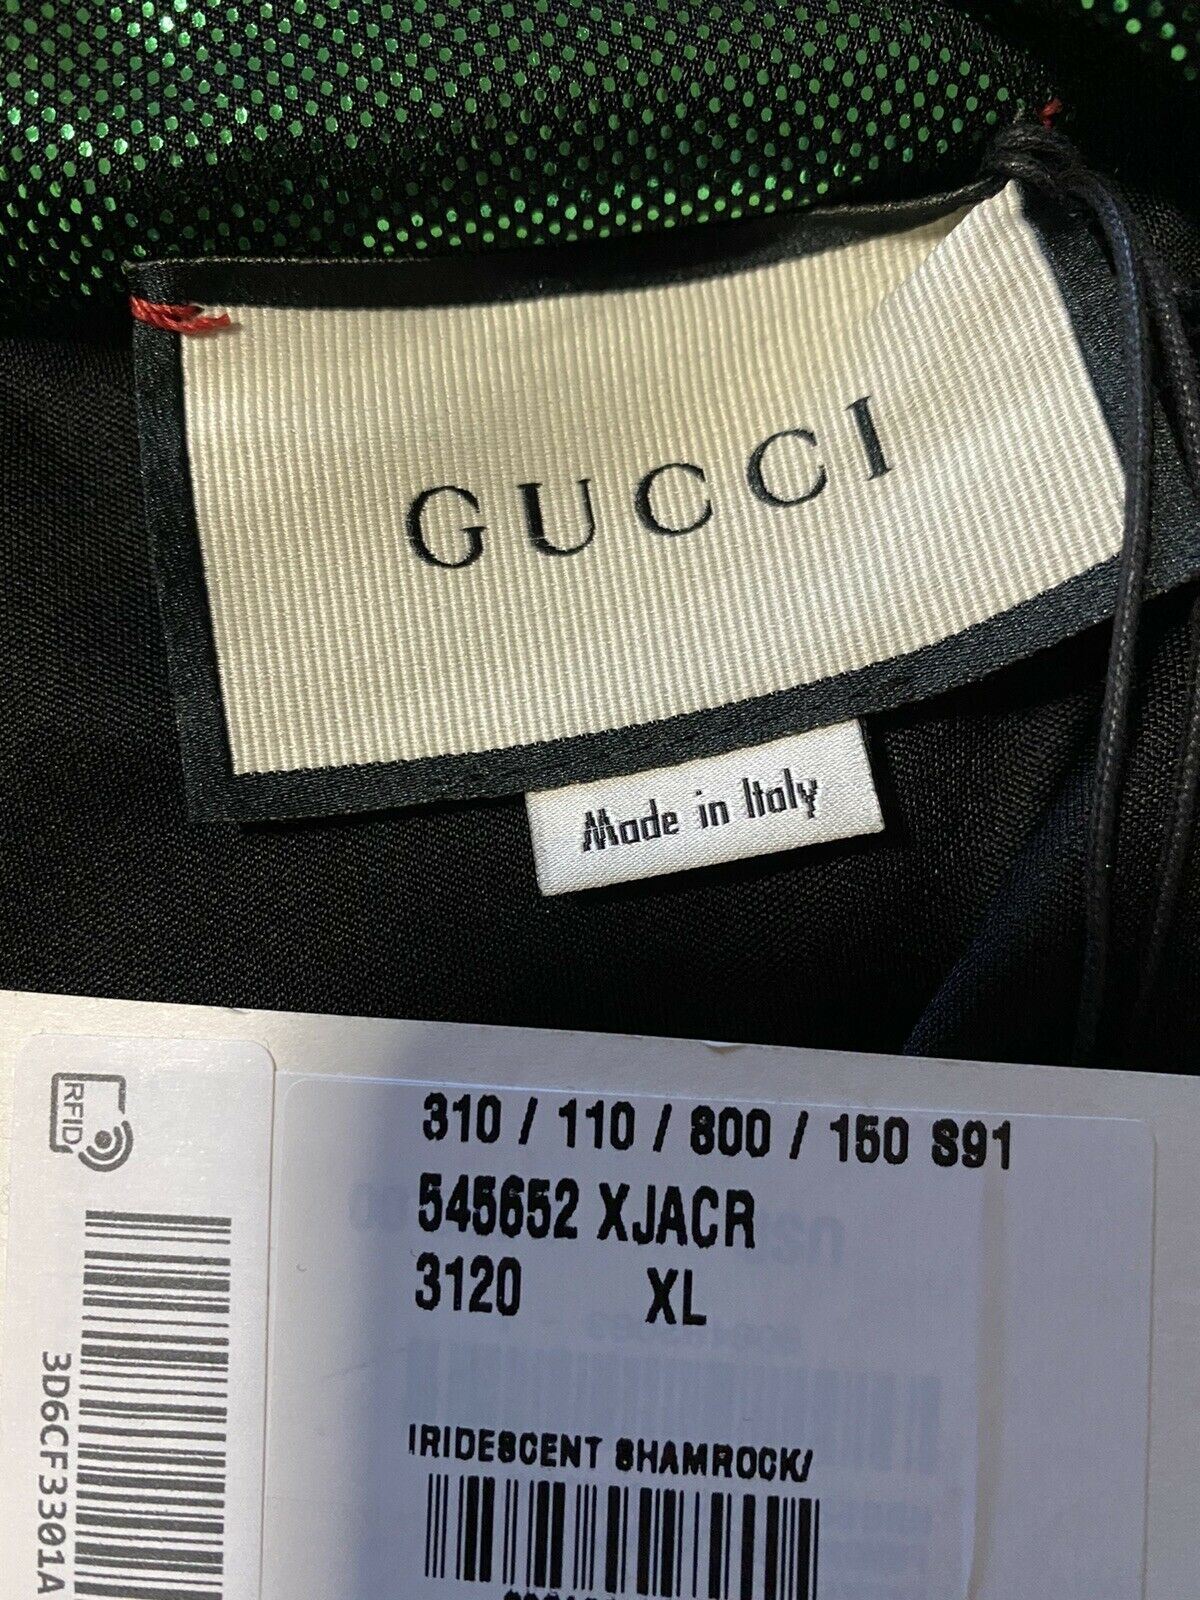 Neuer 3480 $ Gucci Herrenanzug, laminierte Trainingsjacke, Jogginghose, Grün, XL, Italien